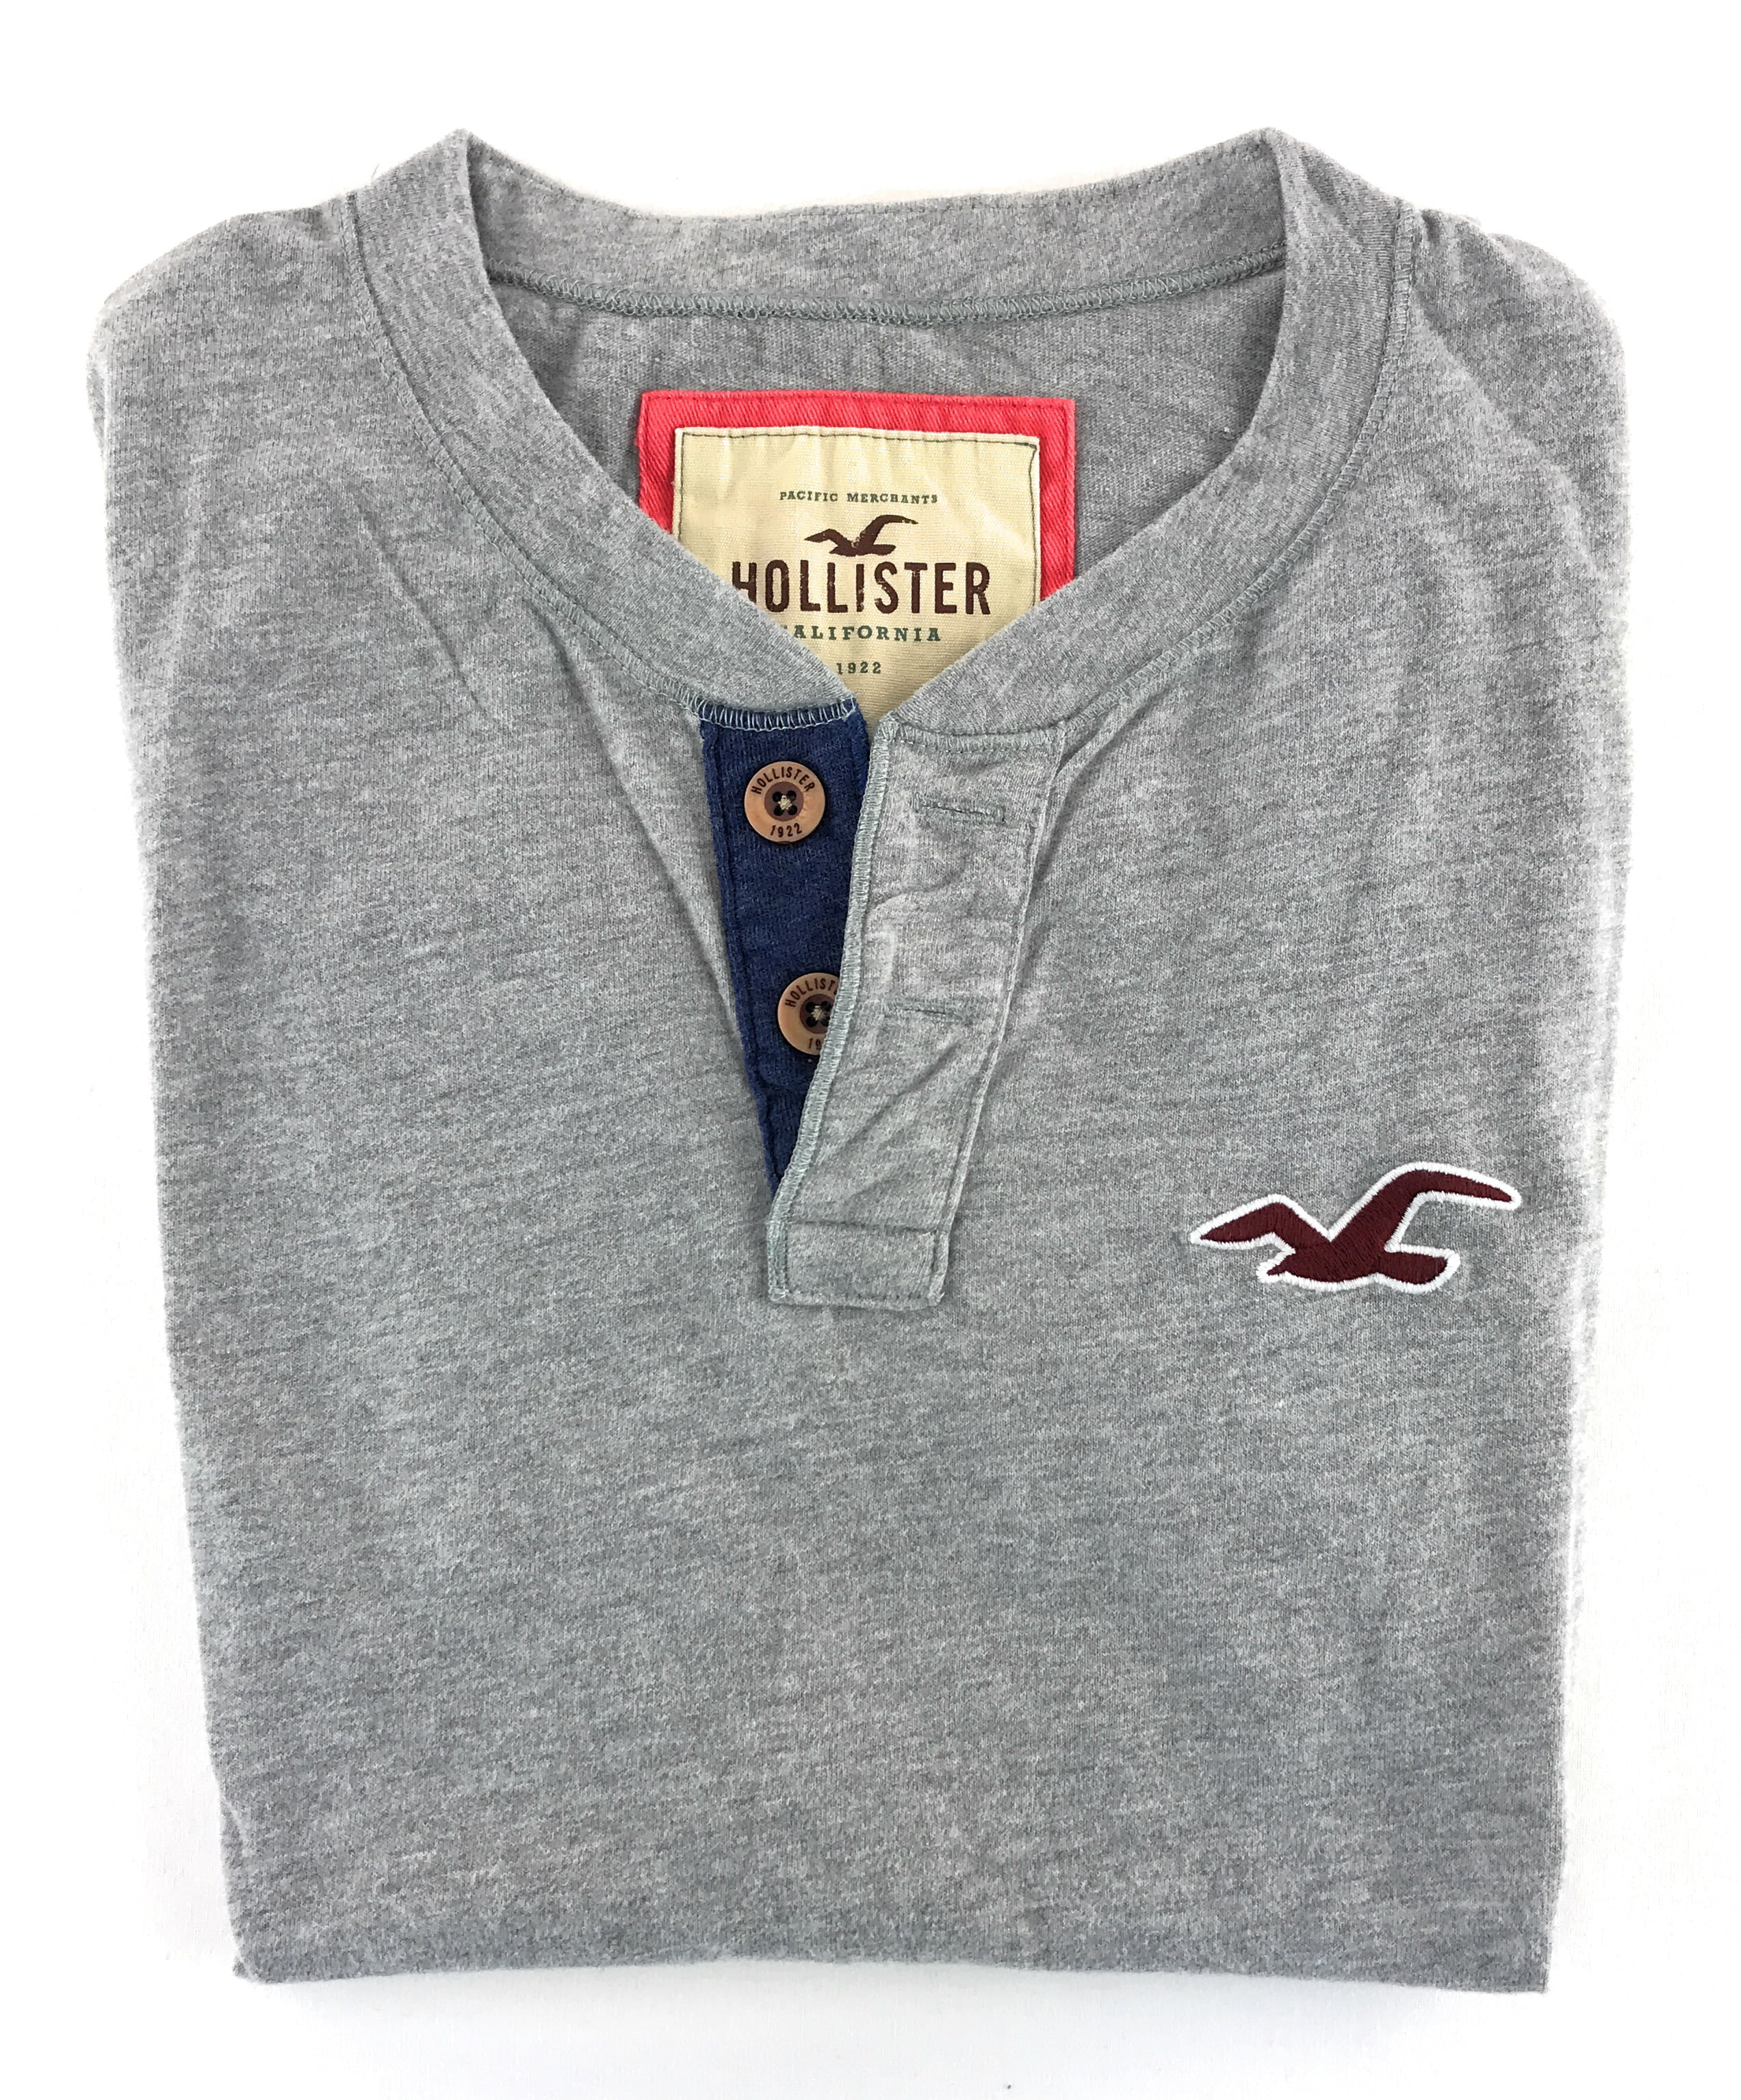 Hollister T-shirt Men's Classic Seagull Logo Printed Short Sleeve